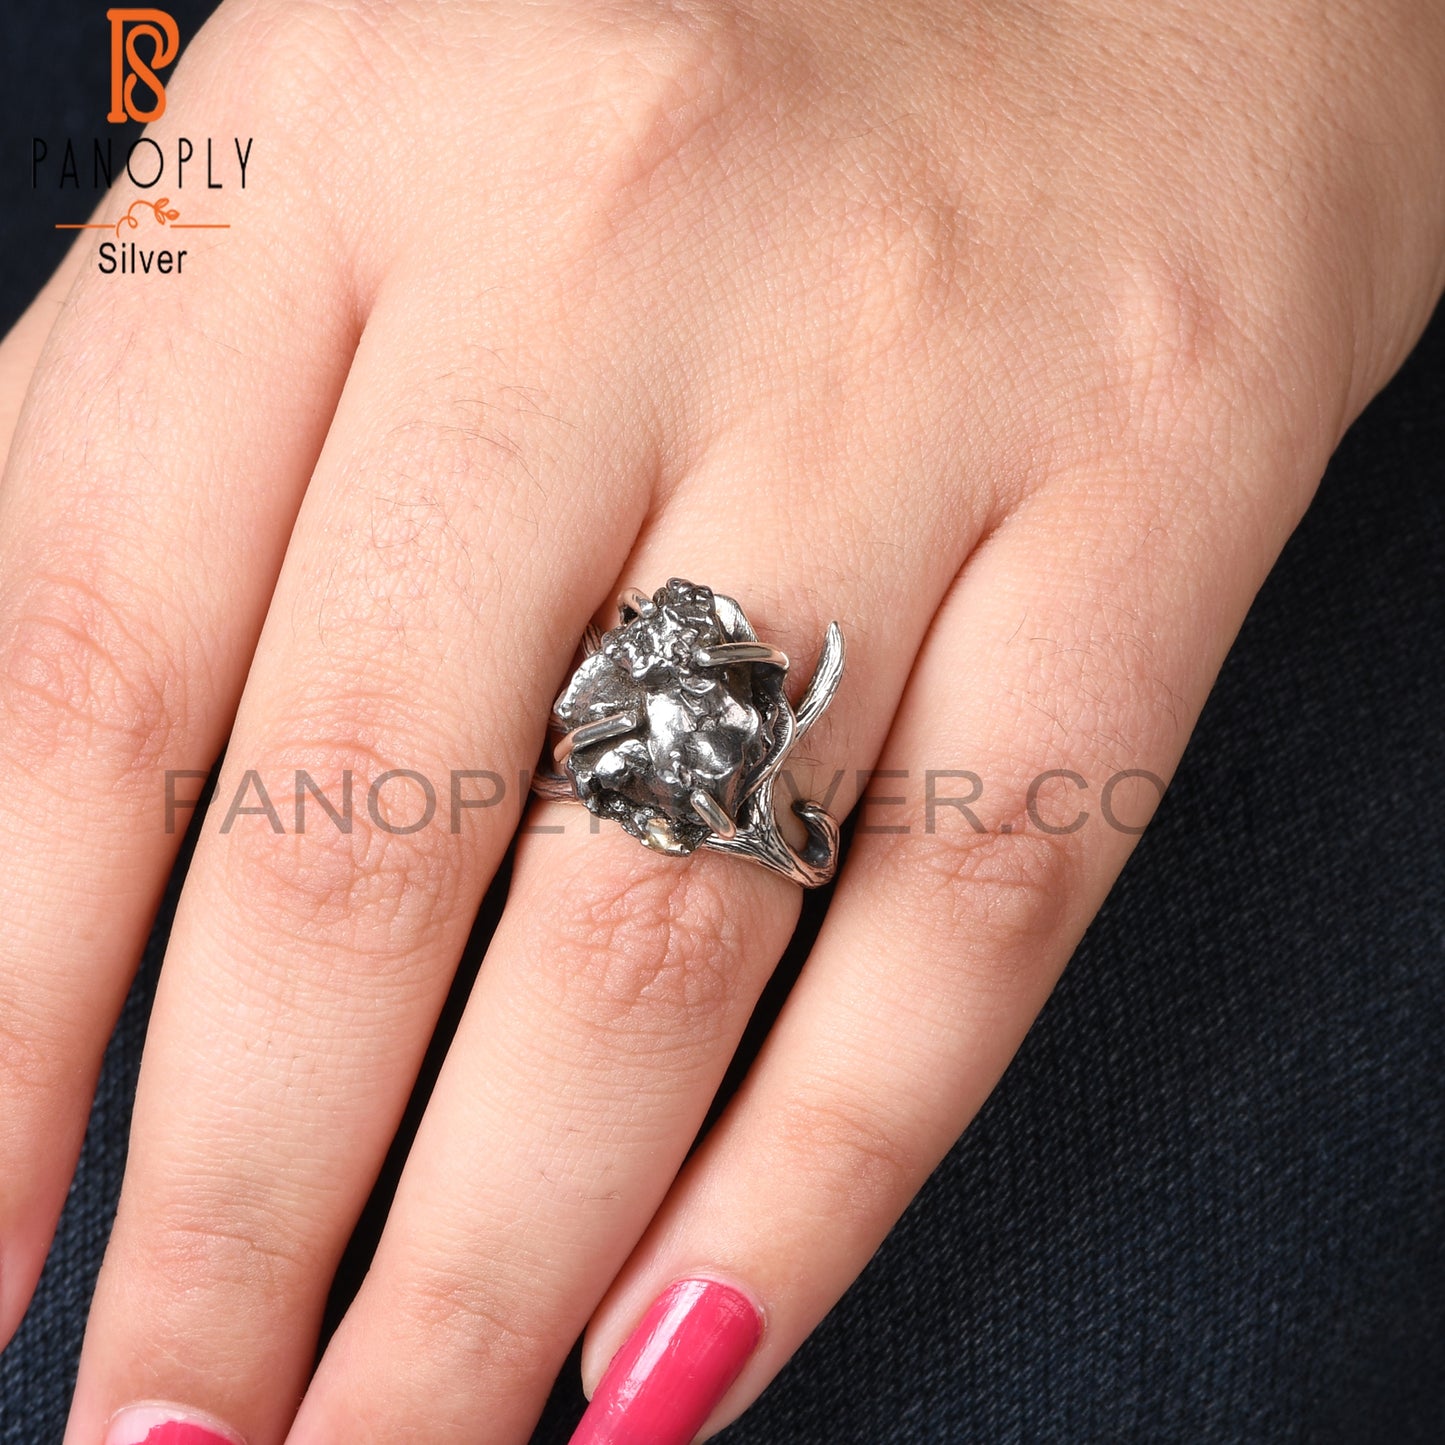 Meteorite Rough 925 Sterling Silver Branch Ring